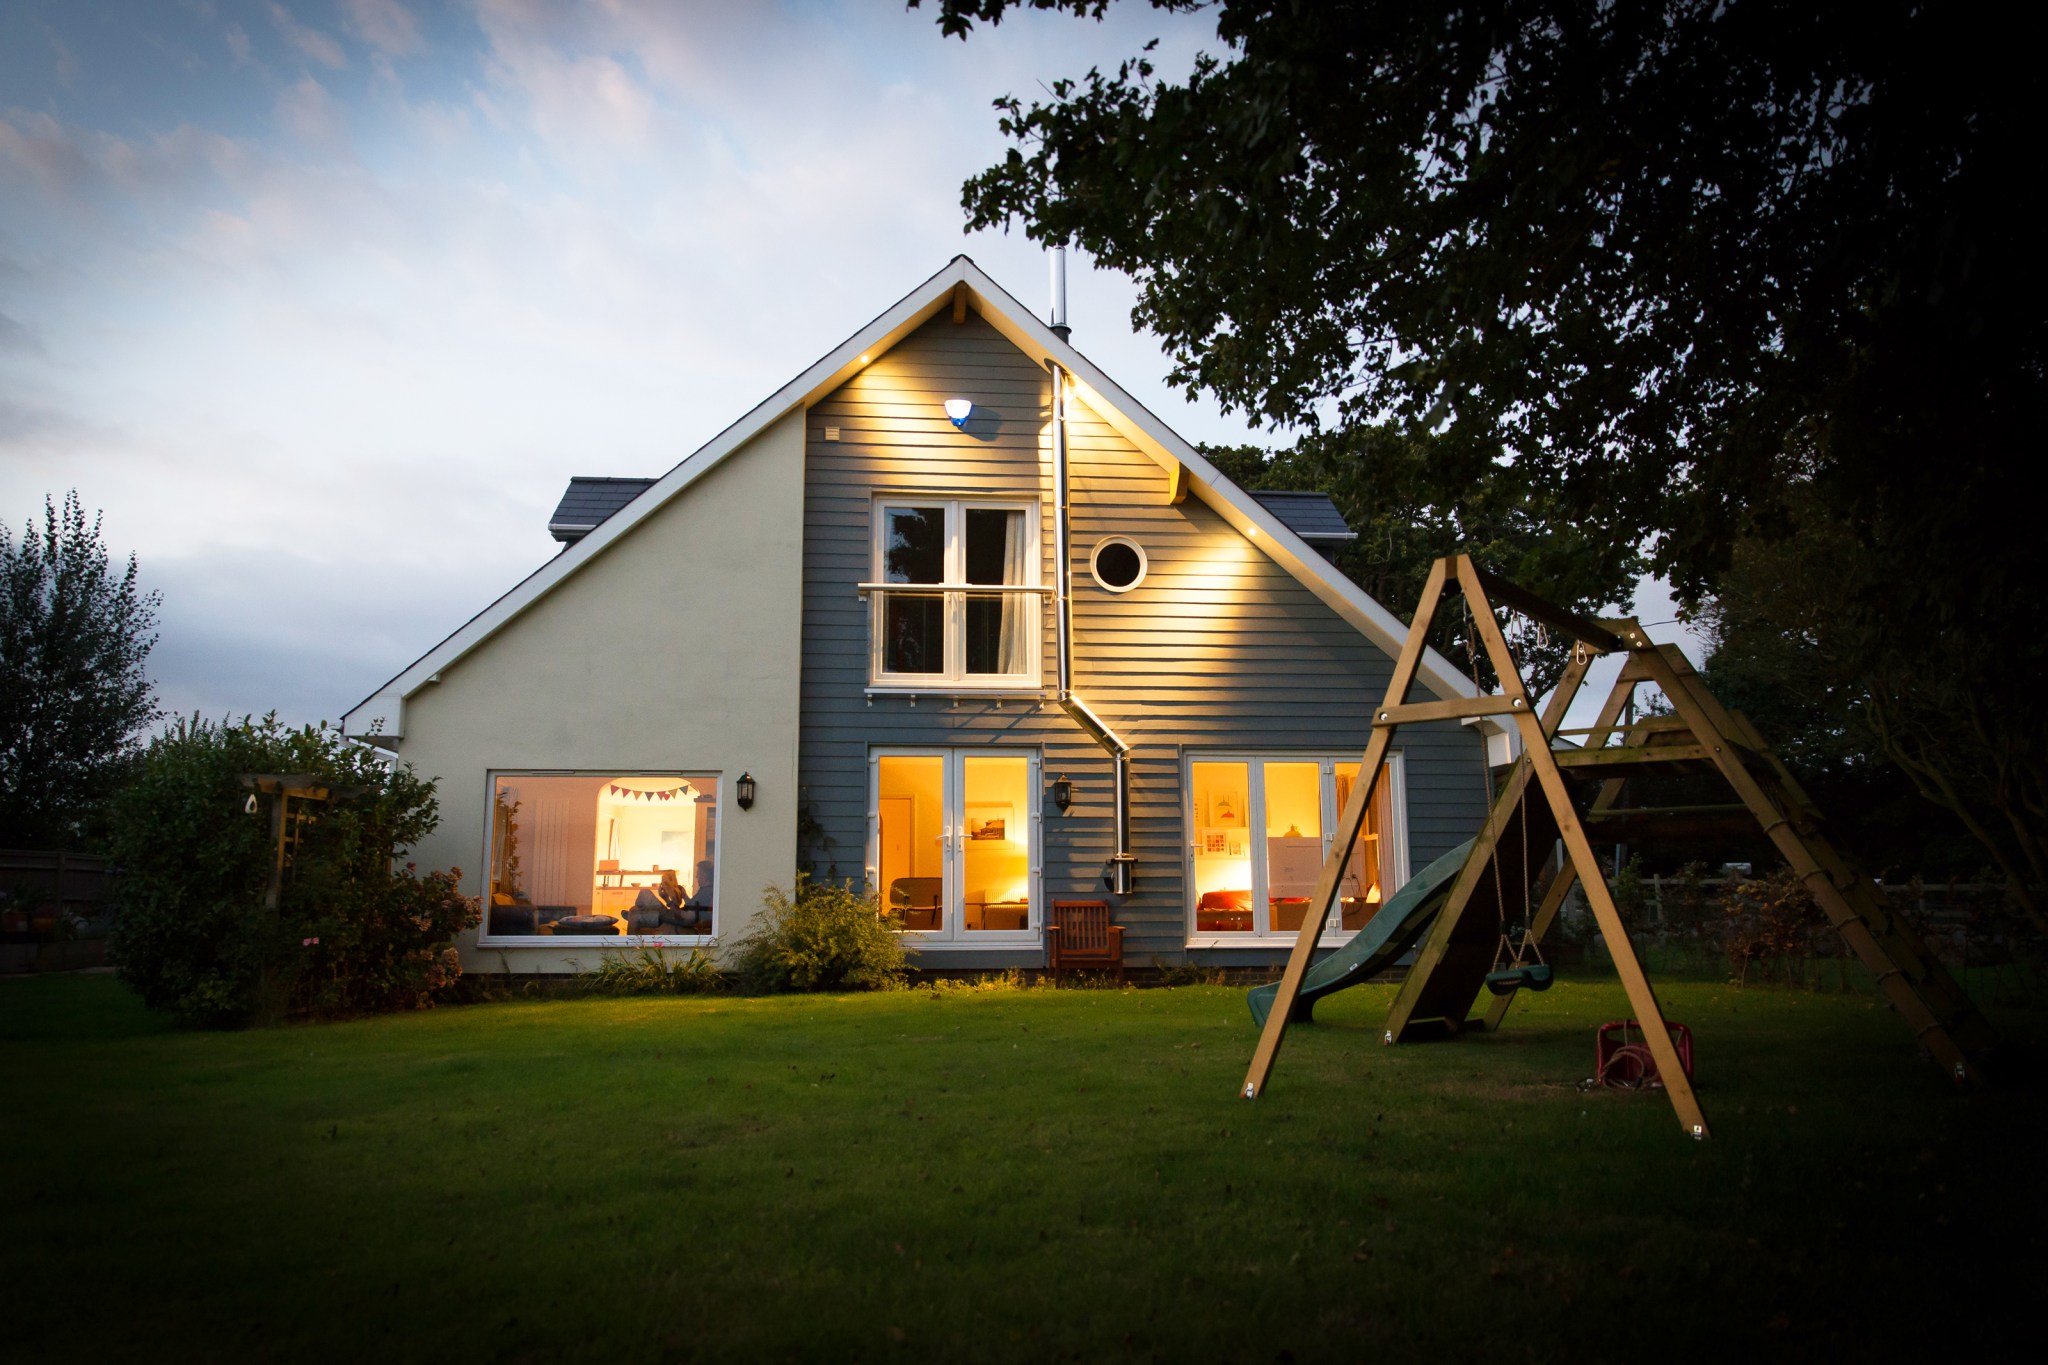 House with swing set illuminated at night | Prevent Burglary